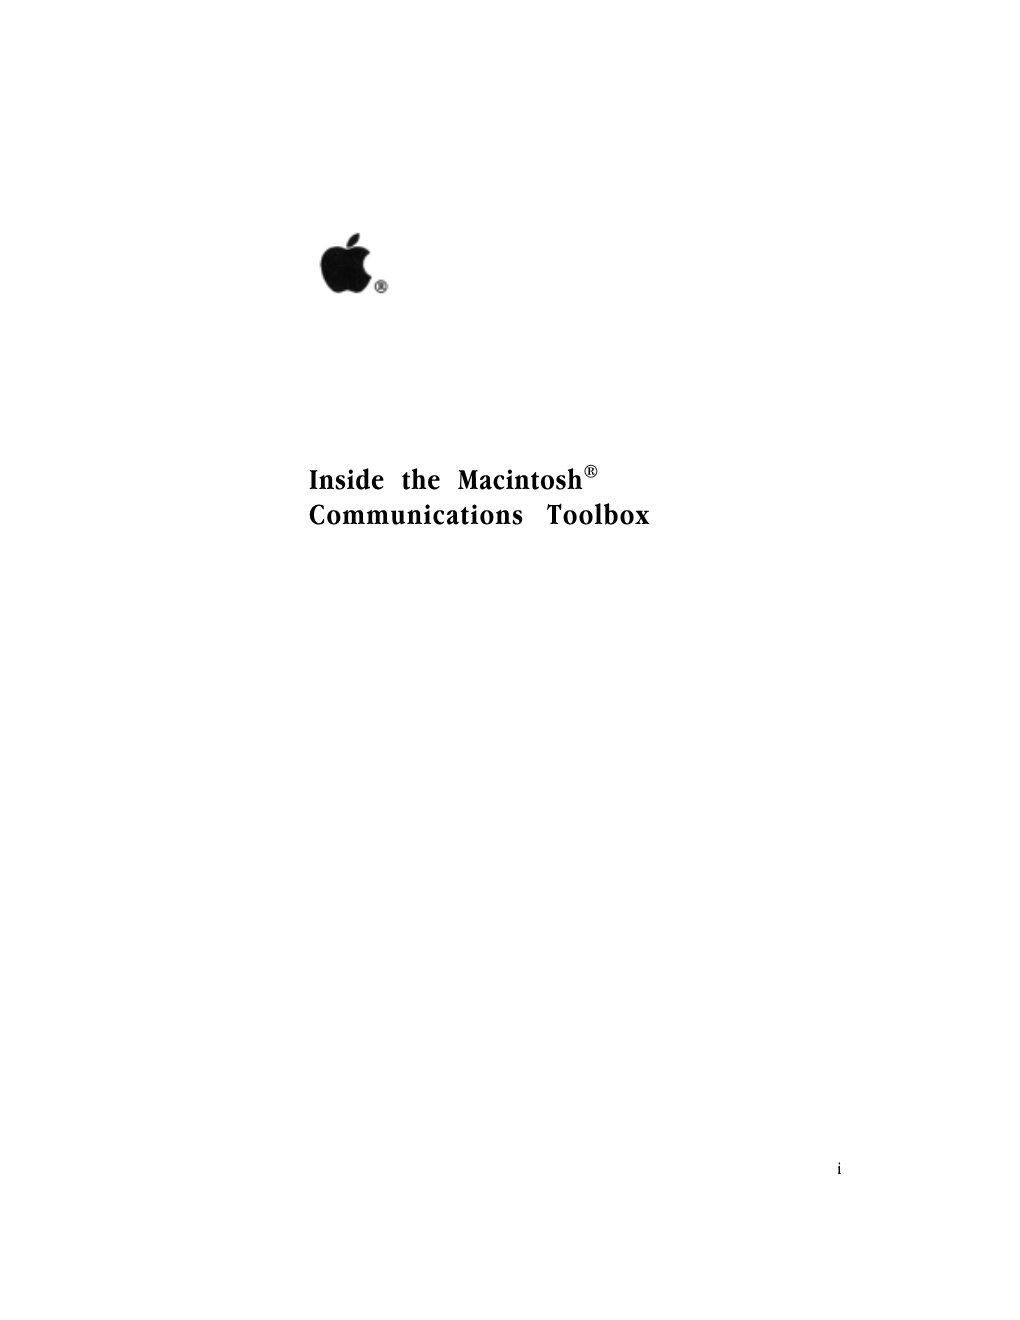 Inside the Macintosh Communications Toolbox